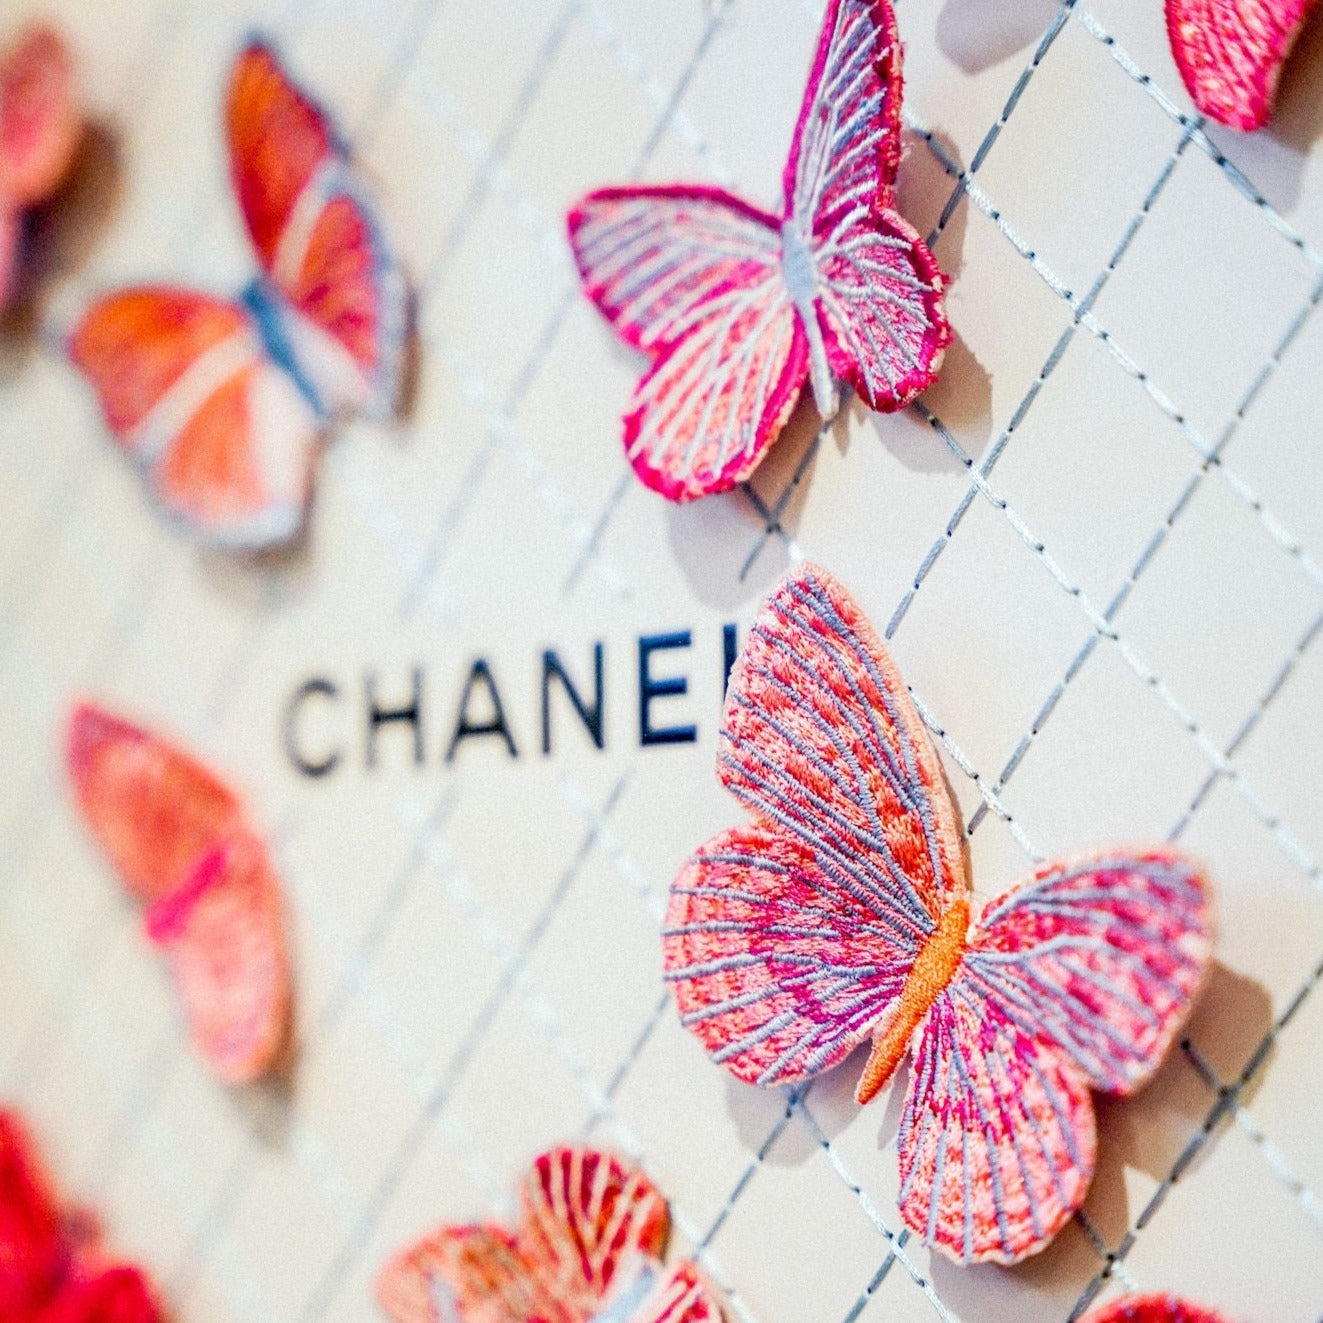 Chanel Flutter on White By Stephen Wilson 12x12x2